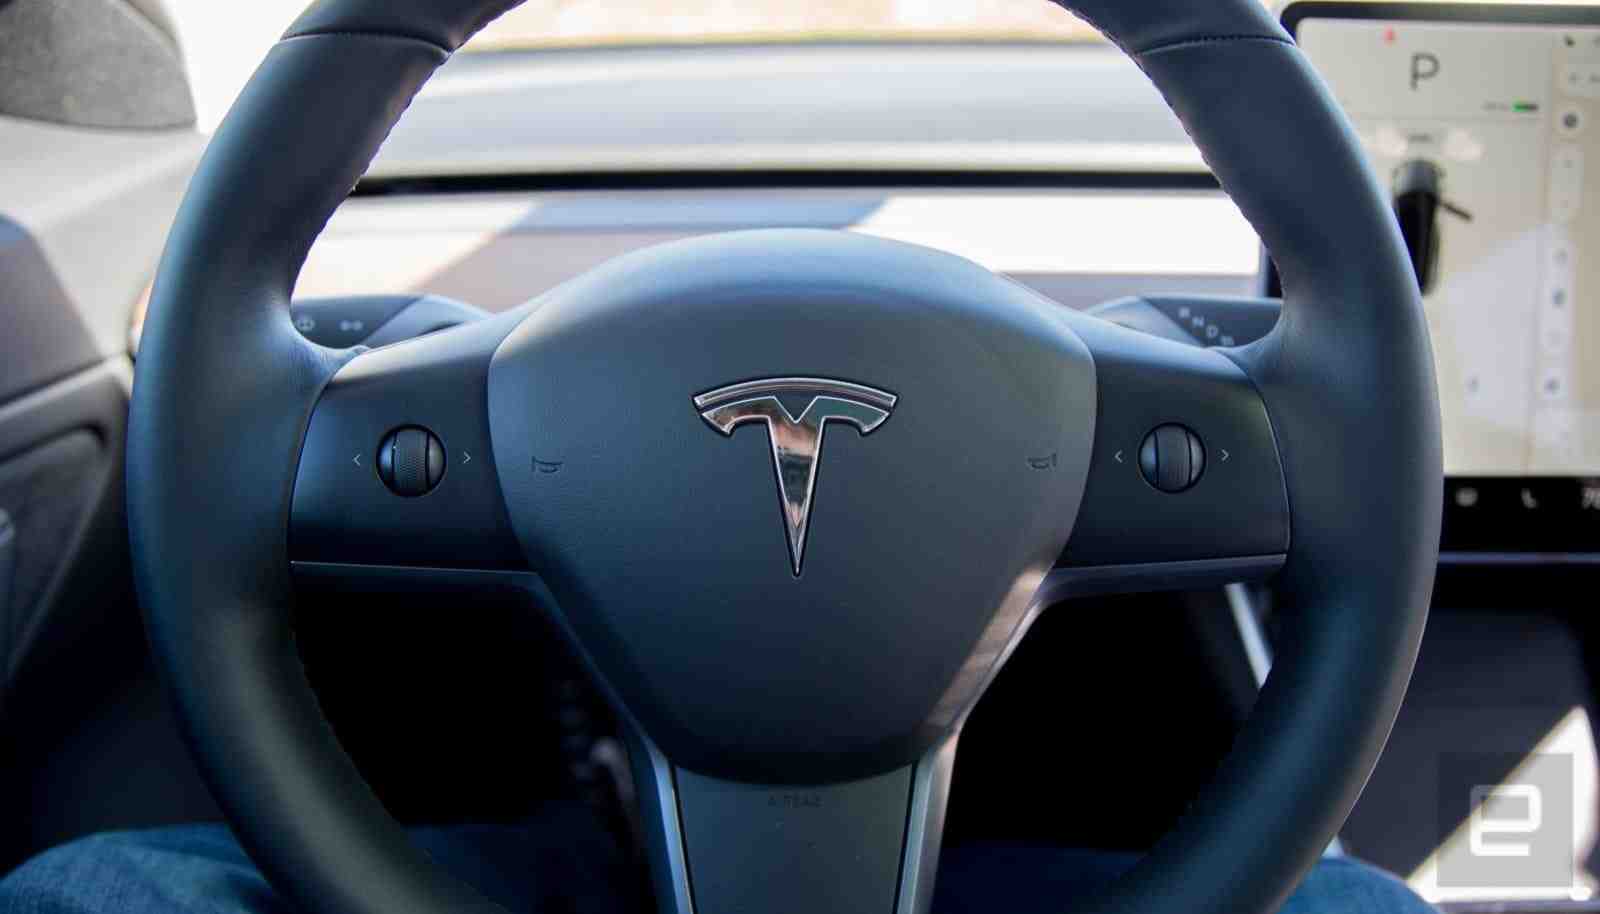 When should I precondition my Tesla?